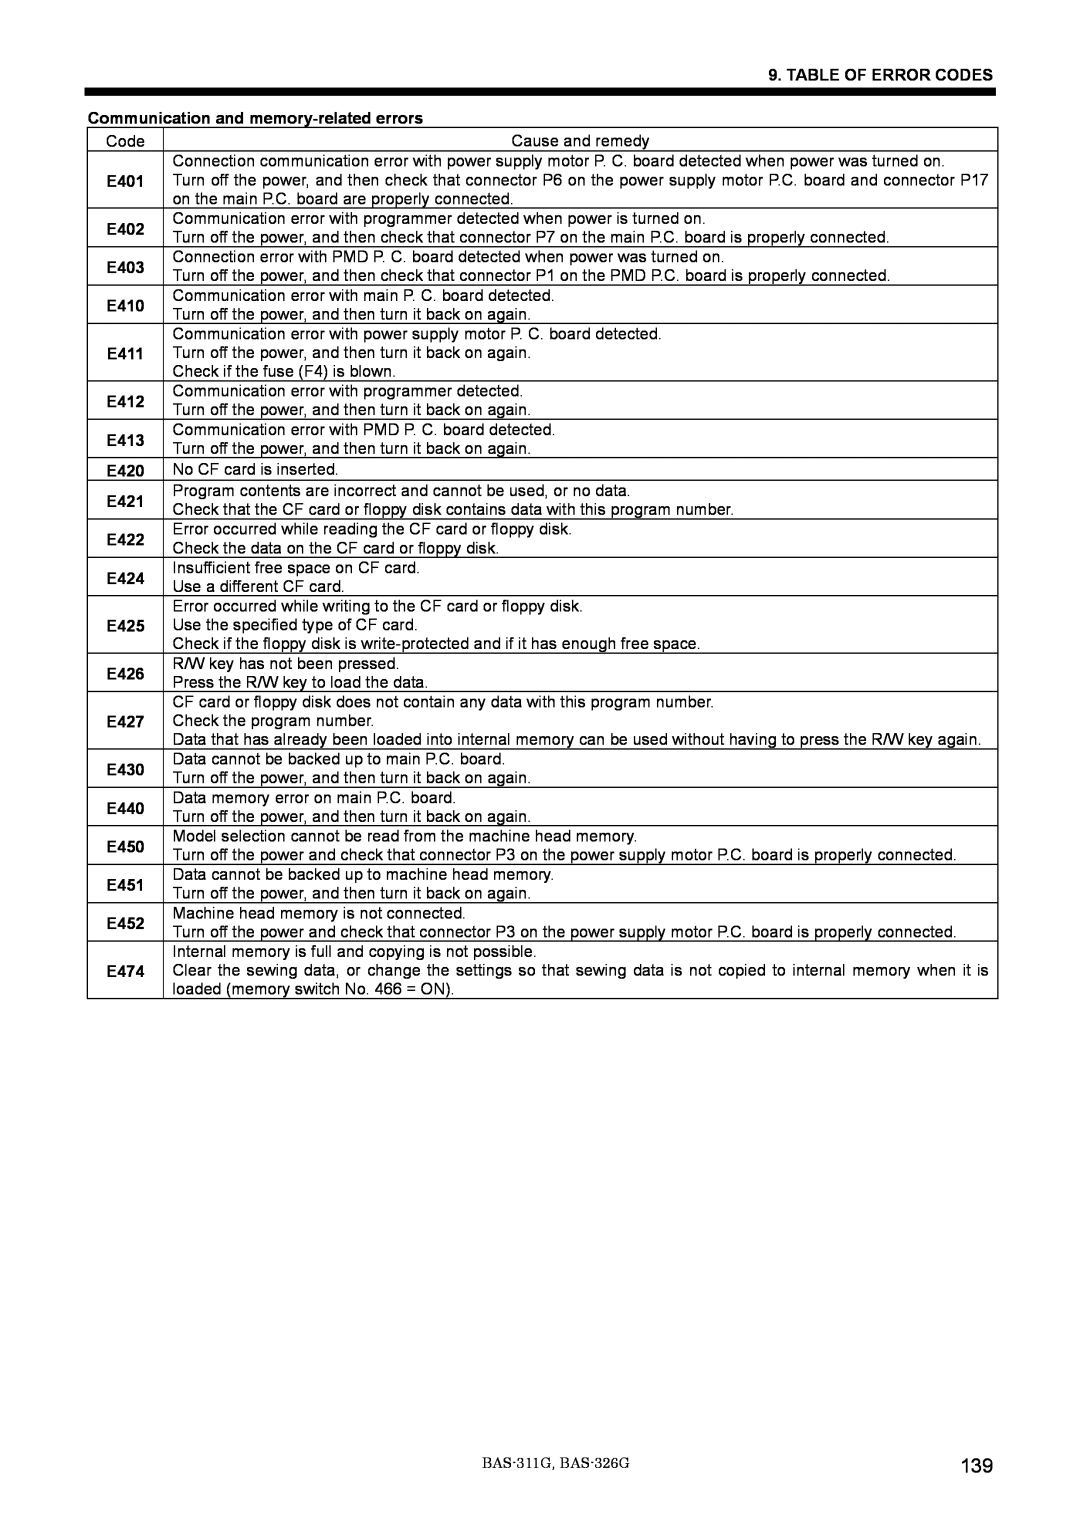 Brother BAS-311G Table Of Error Codes, Communication and memory-related errors, E401, E402, E403, E410, E411, E412, E413 